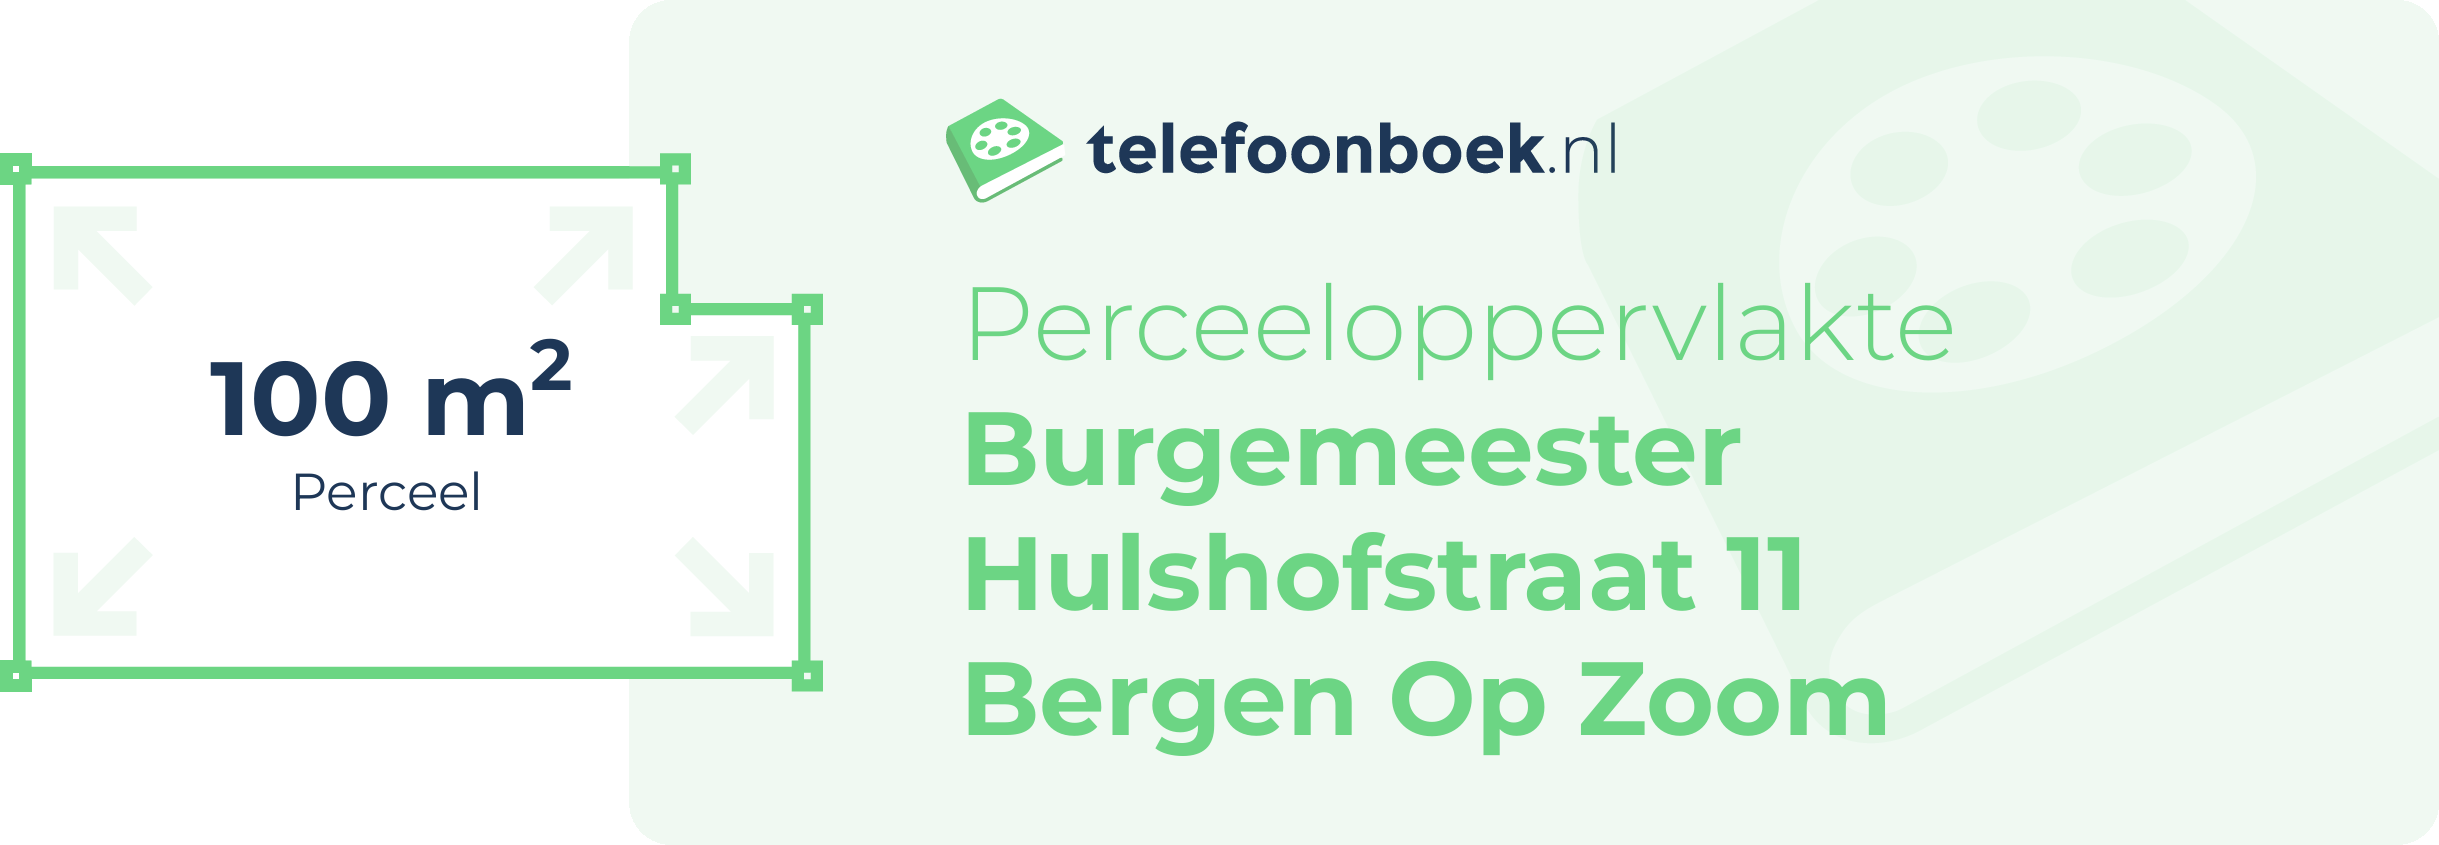 Perceeloppervlakte Burgemeester Hulshofstraat 11 Bergen Op Zoom